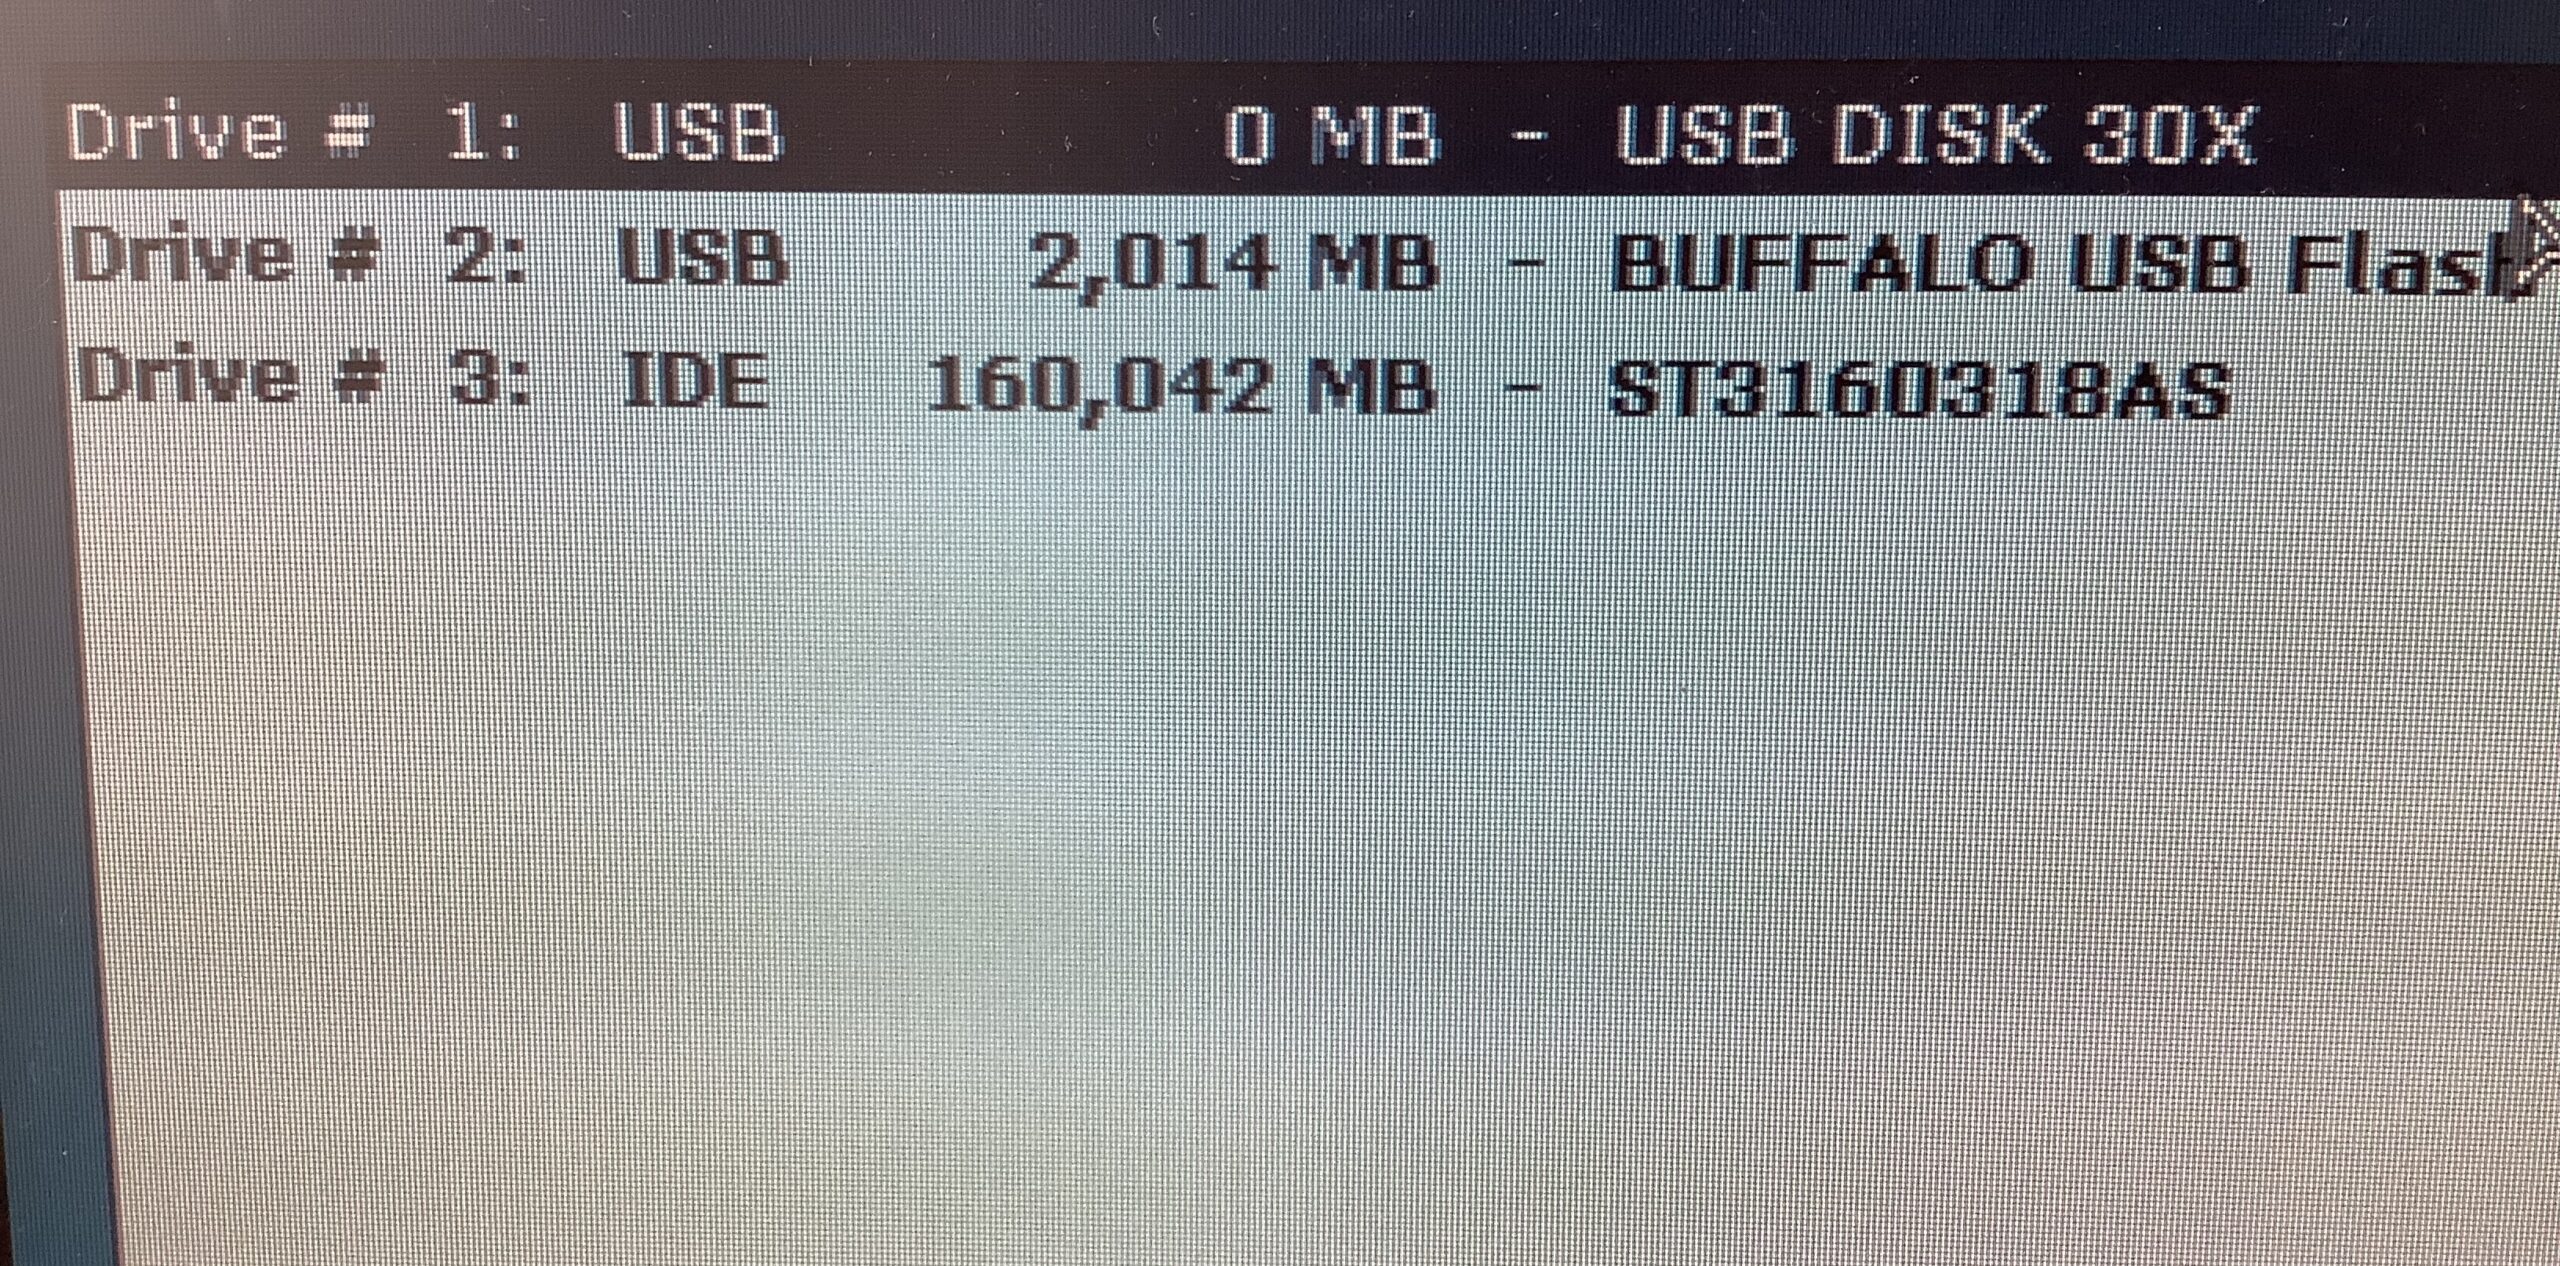 USBの容量が0MB、型番もUSB DISK 30Xと表示されてしまう